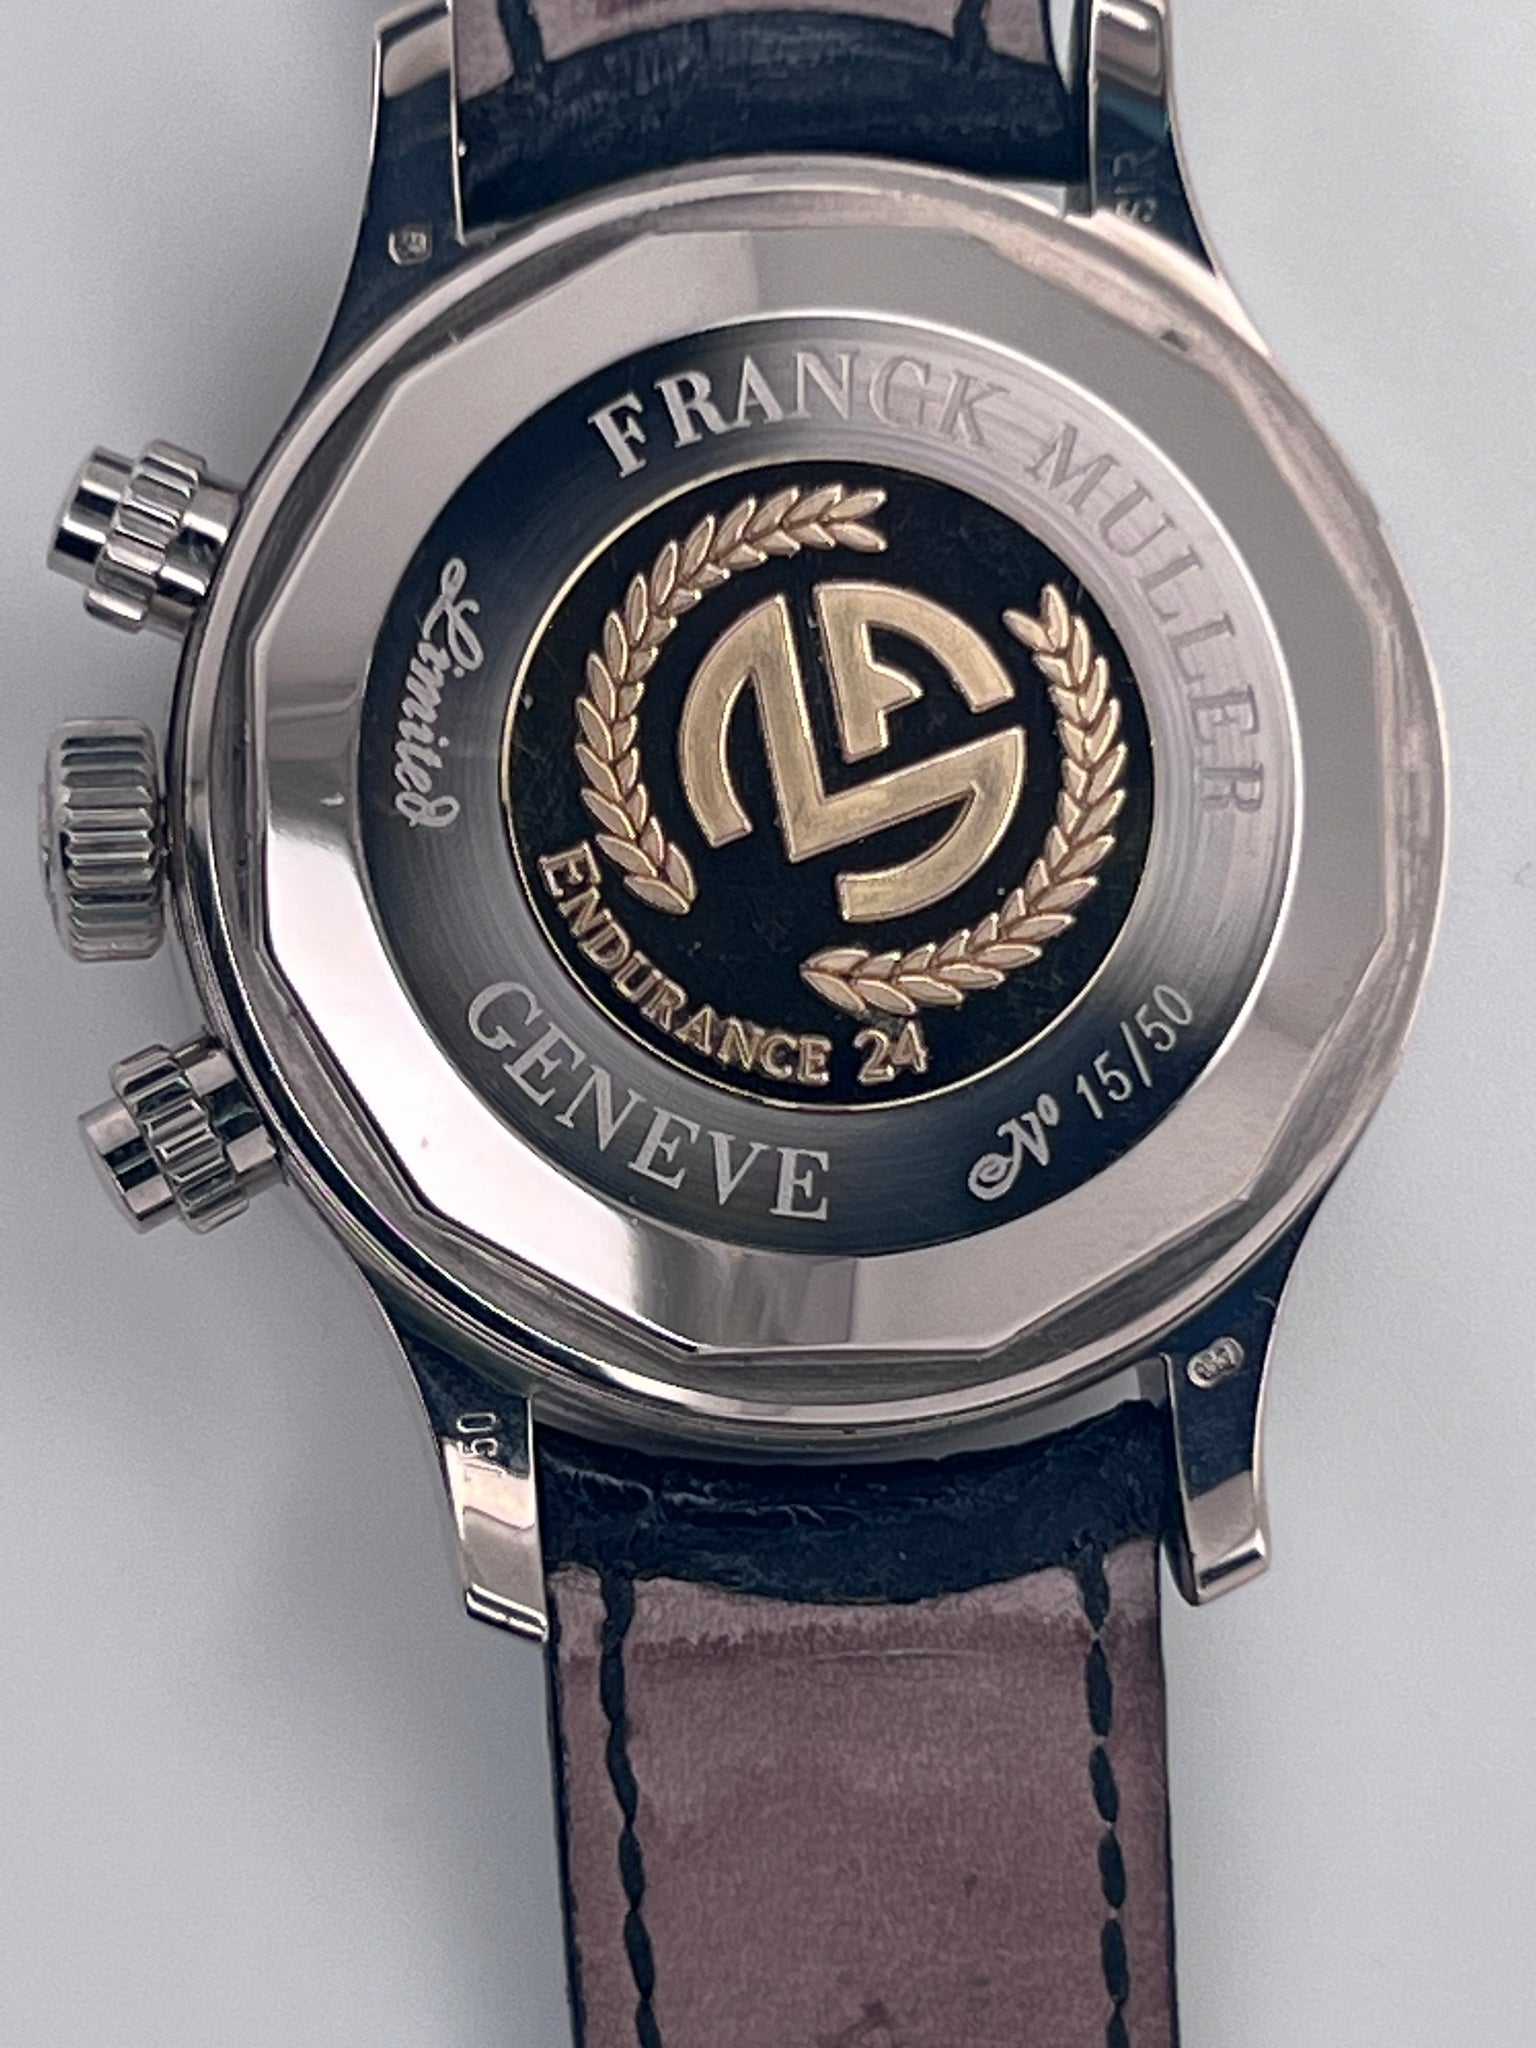 Franck Muller Endurance 24 Limited Edition Chronograph